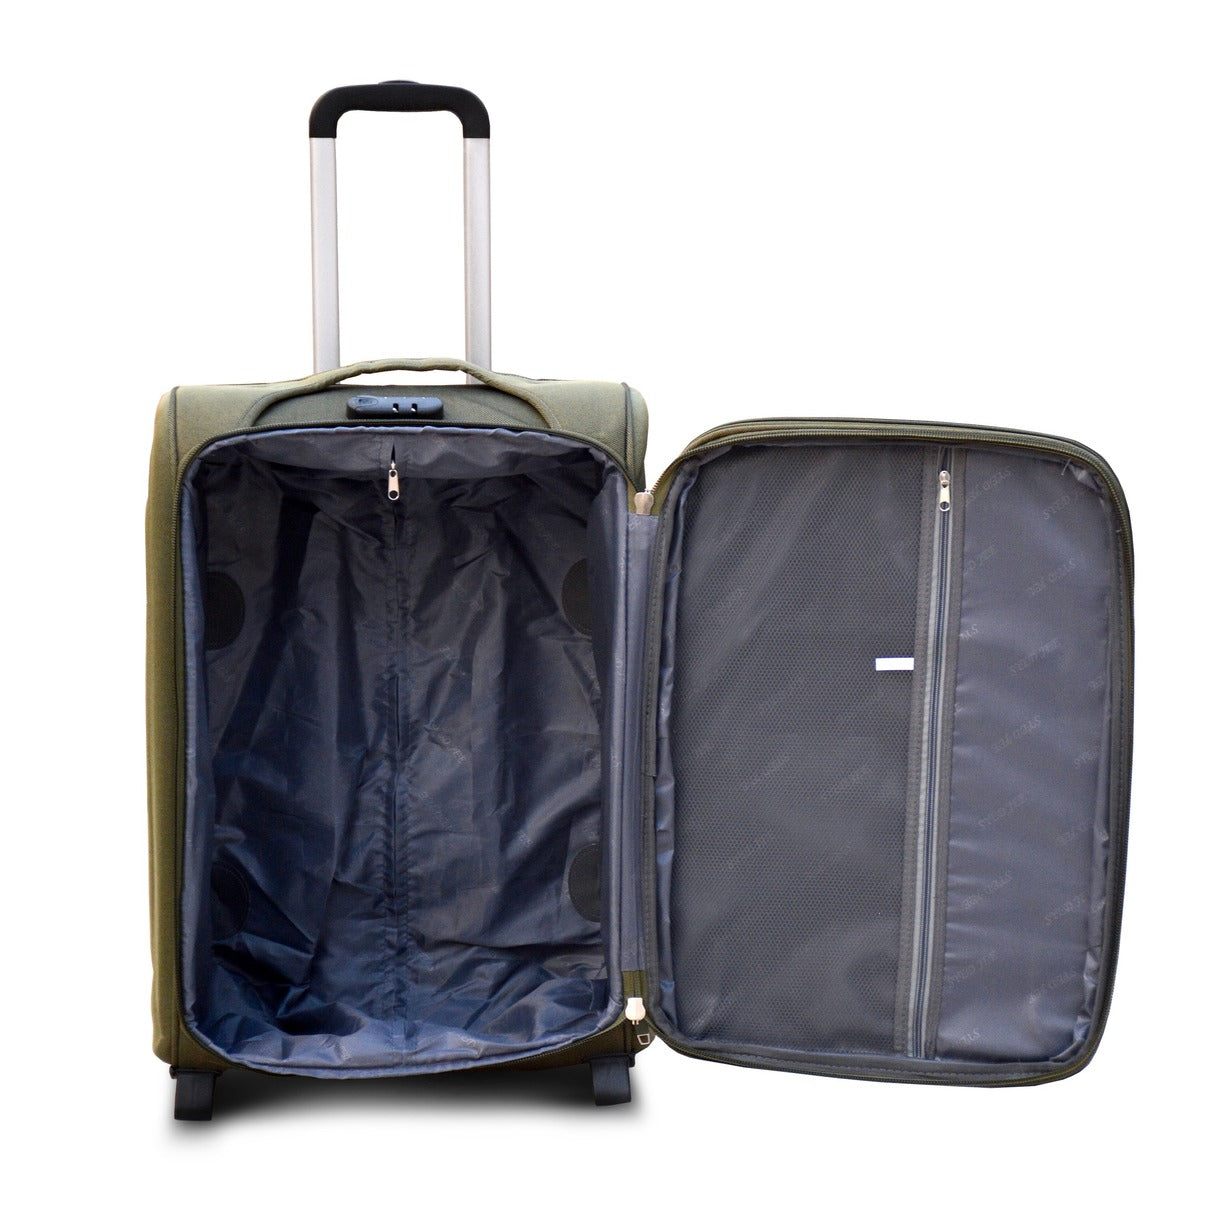 24" Light Green Colour SJ JIAN 2 Wheel Luggage Lightweight Soft Material Trolley Bag Zaappy.com